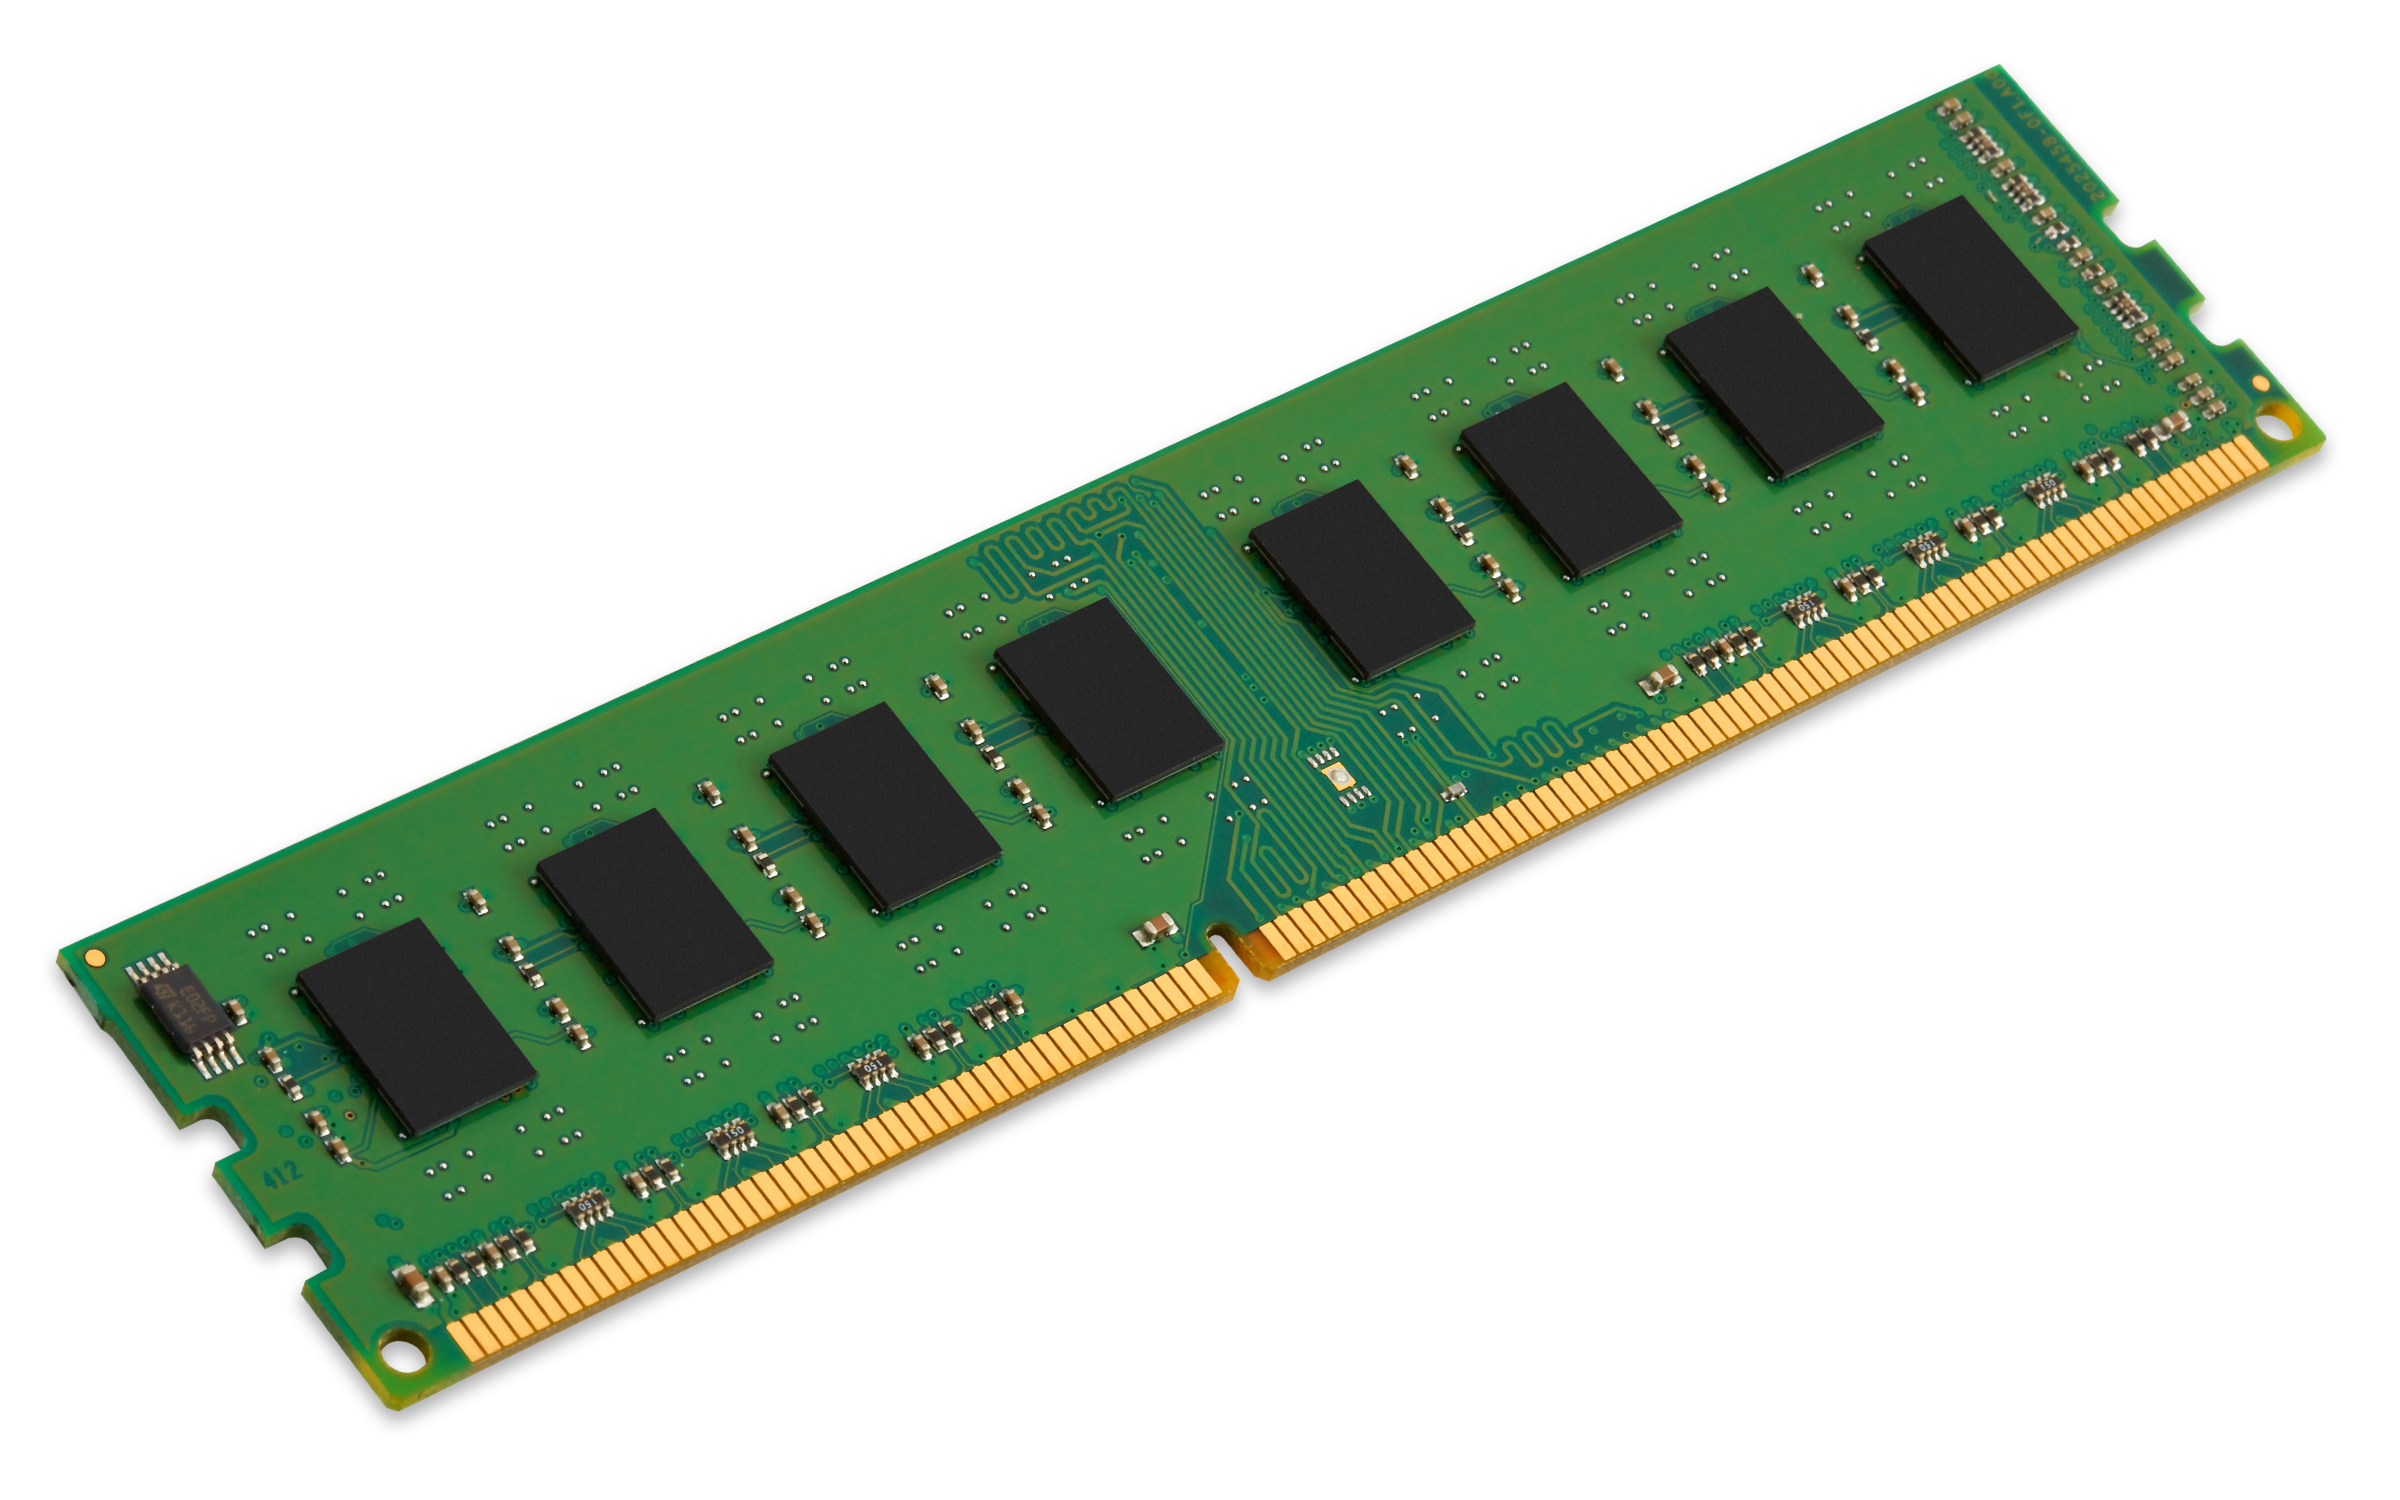 KINGSTON 4GB 1600MHz DDR3L Non-ECC CL11 DIMM 1.35V